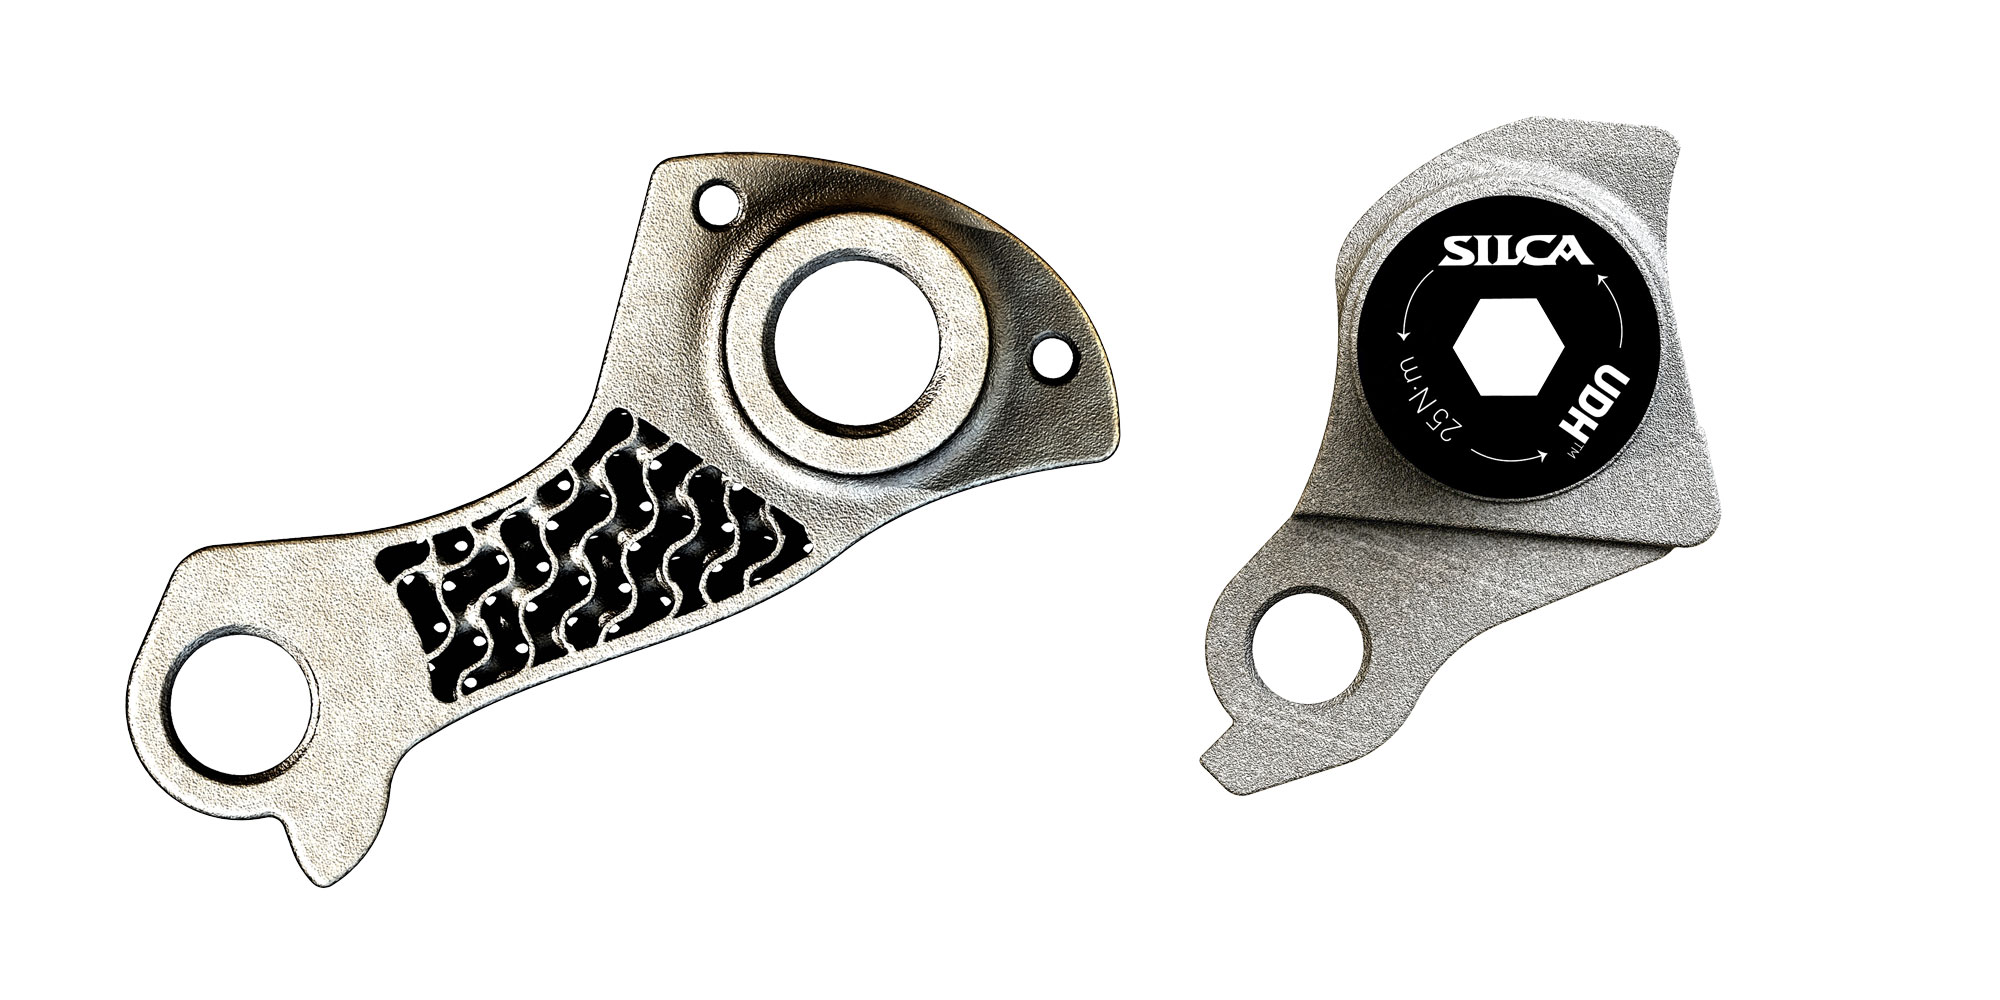 Silca 3D-printed titanium derailleur hanger shifting upgrade, standard or UDH